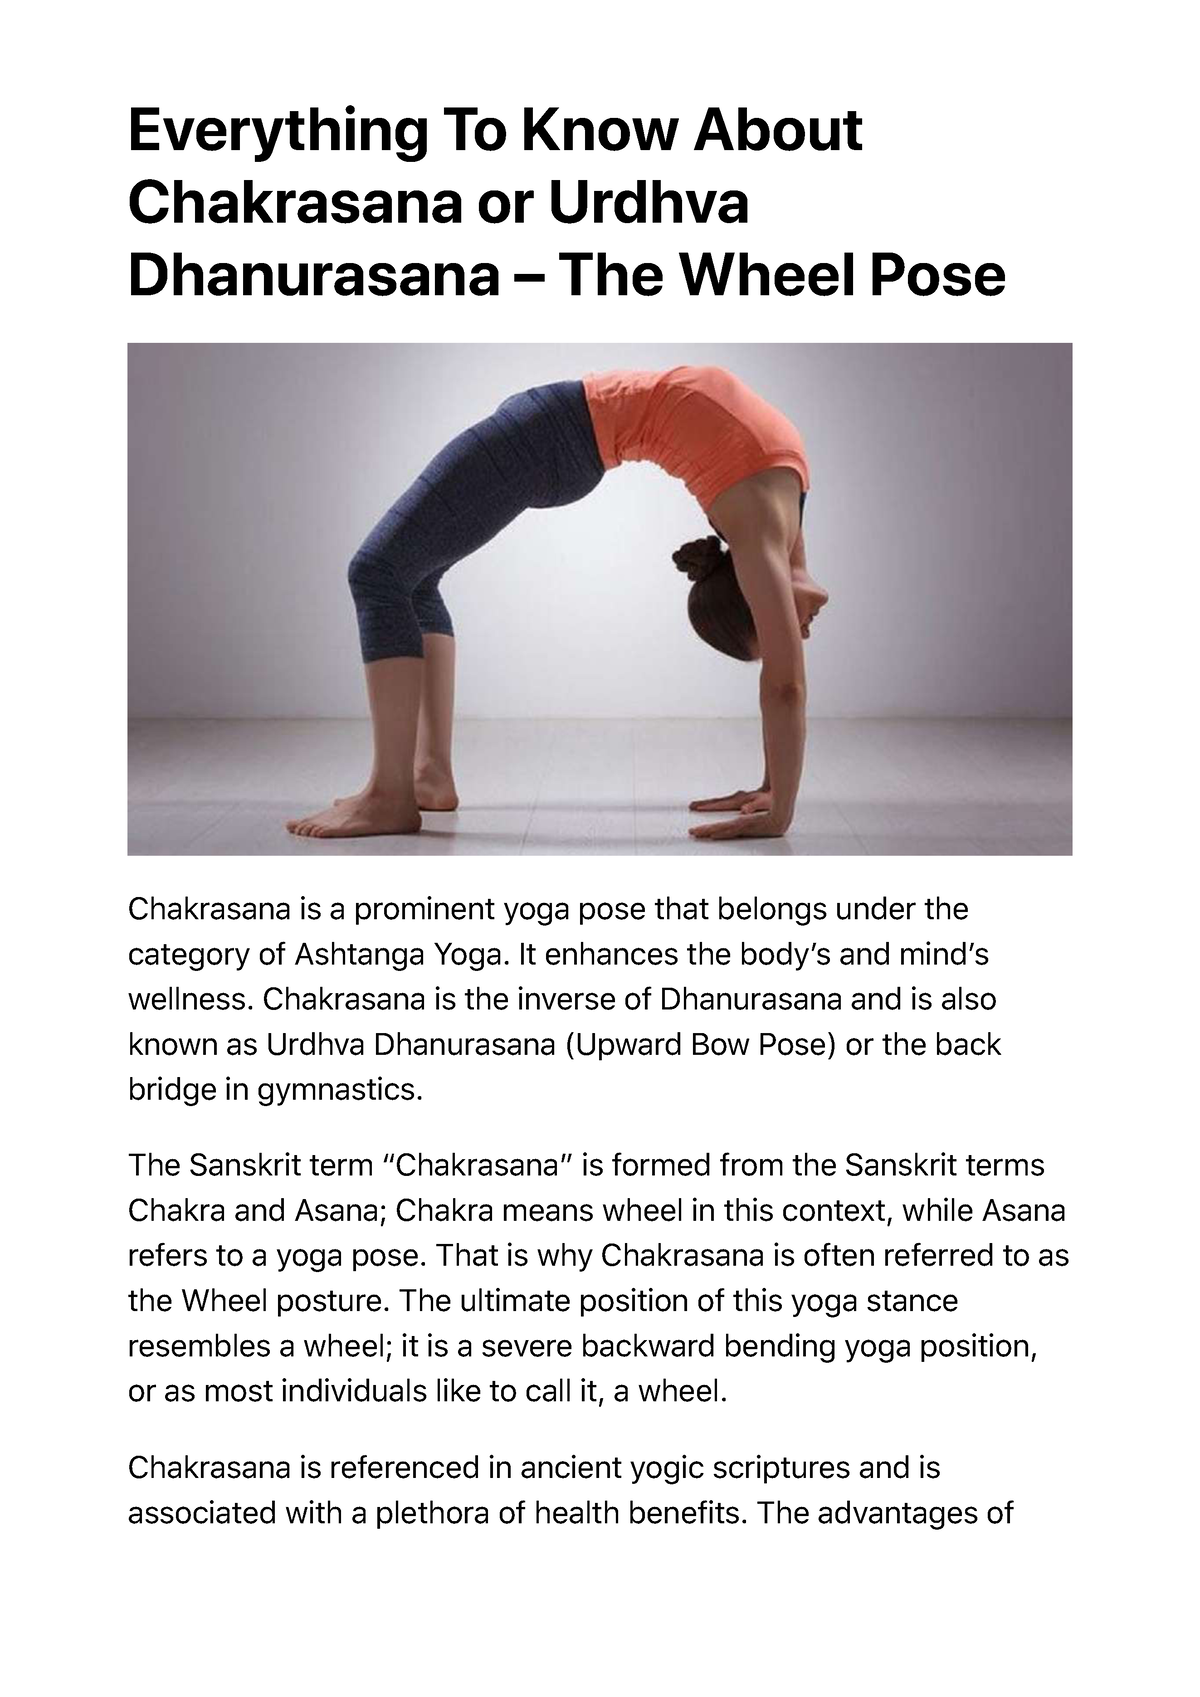 Chakrasana (The Wheel Pose) – How To Do And Benefits | Wheel pose, Yoga  poses, Poses